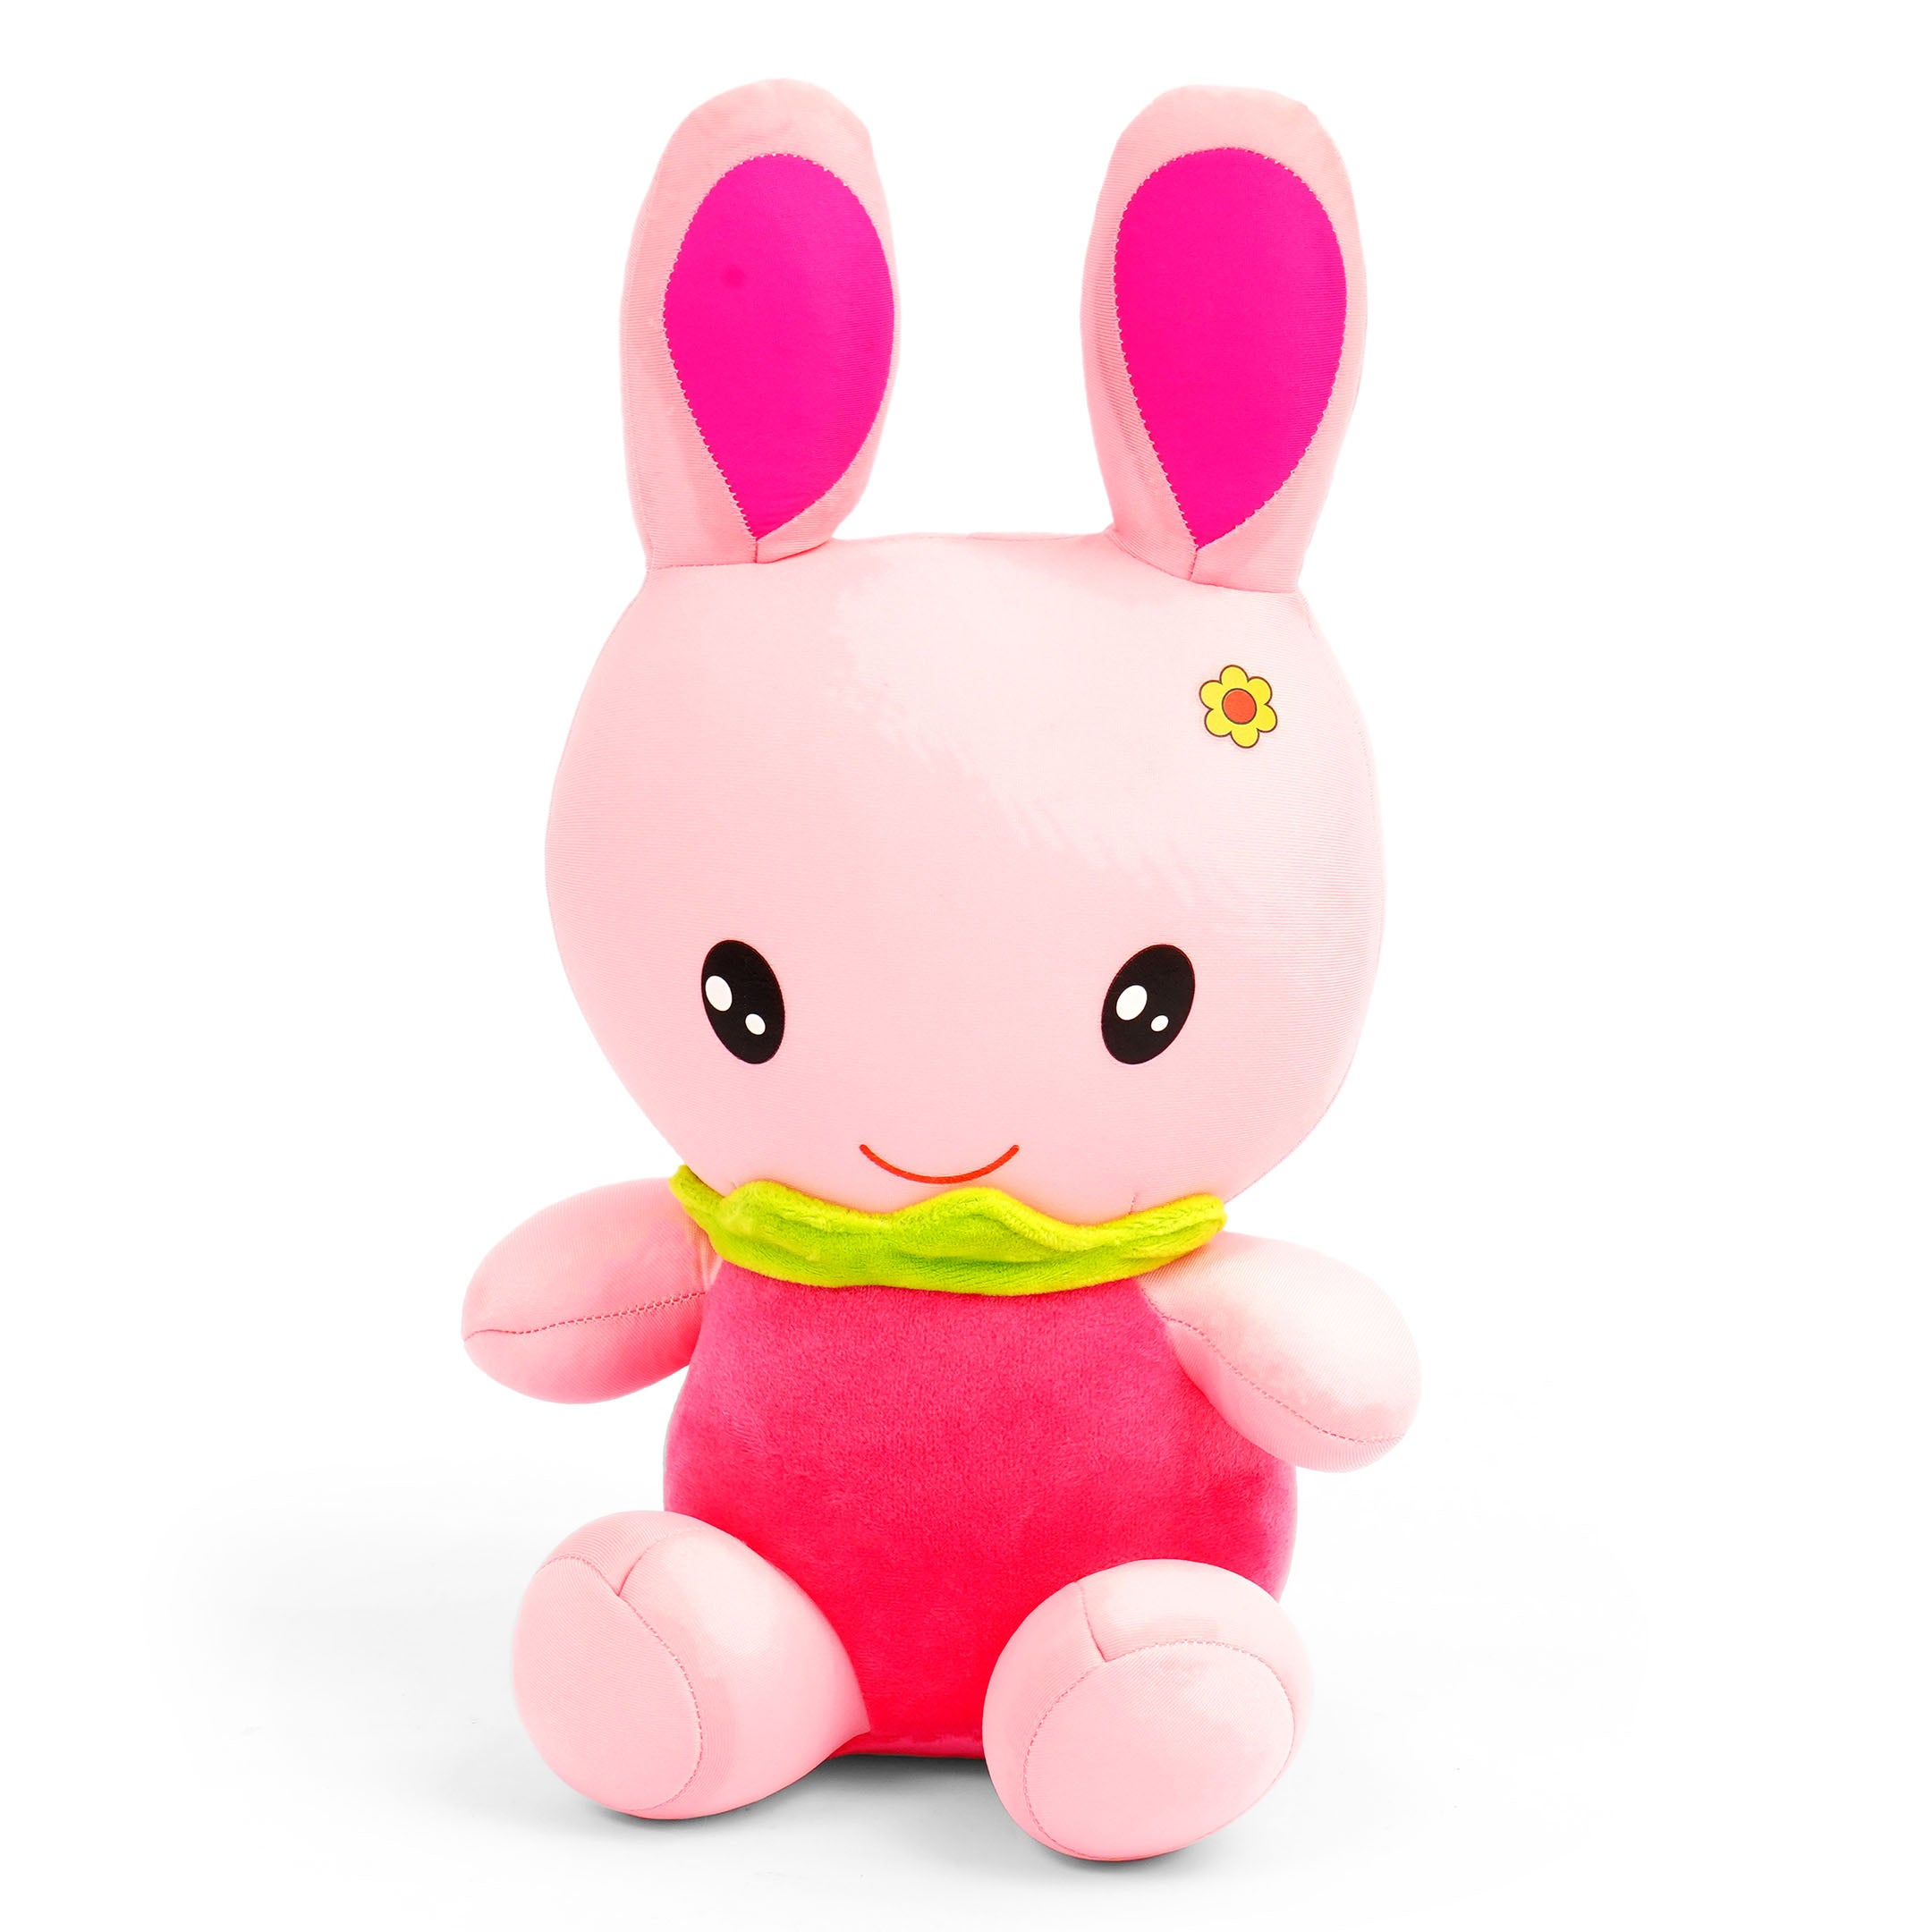 Bunny Stuffed Toy